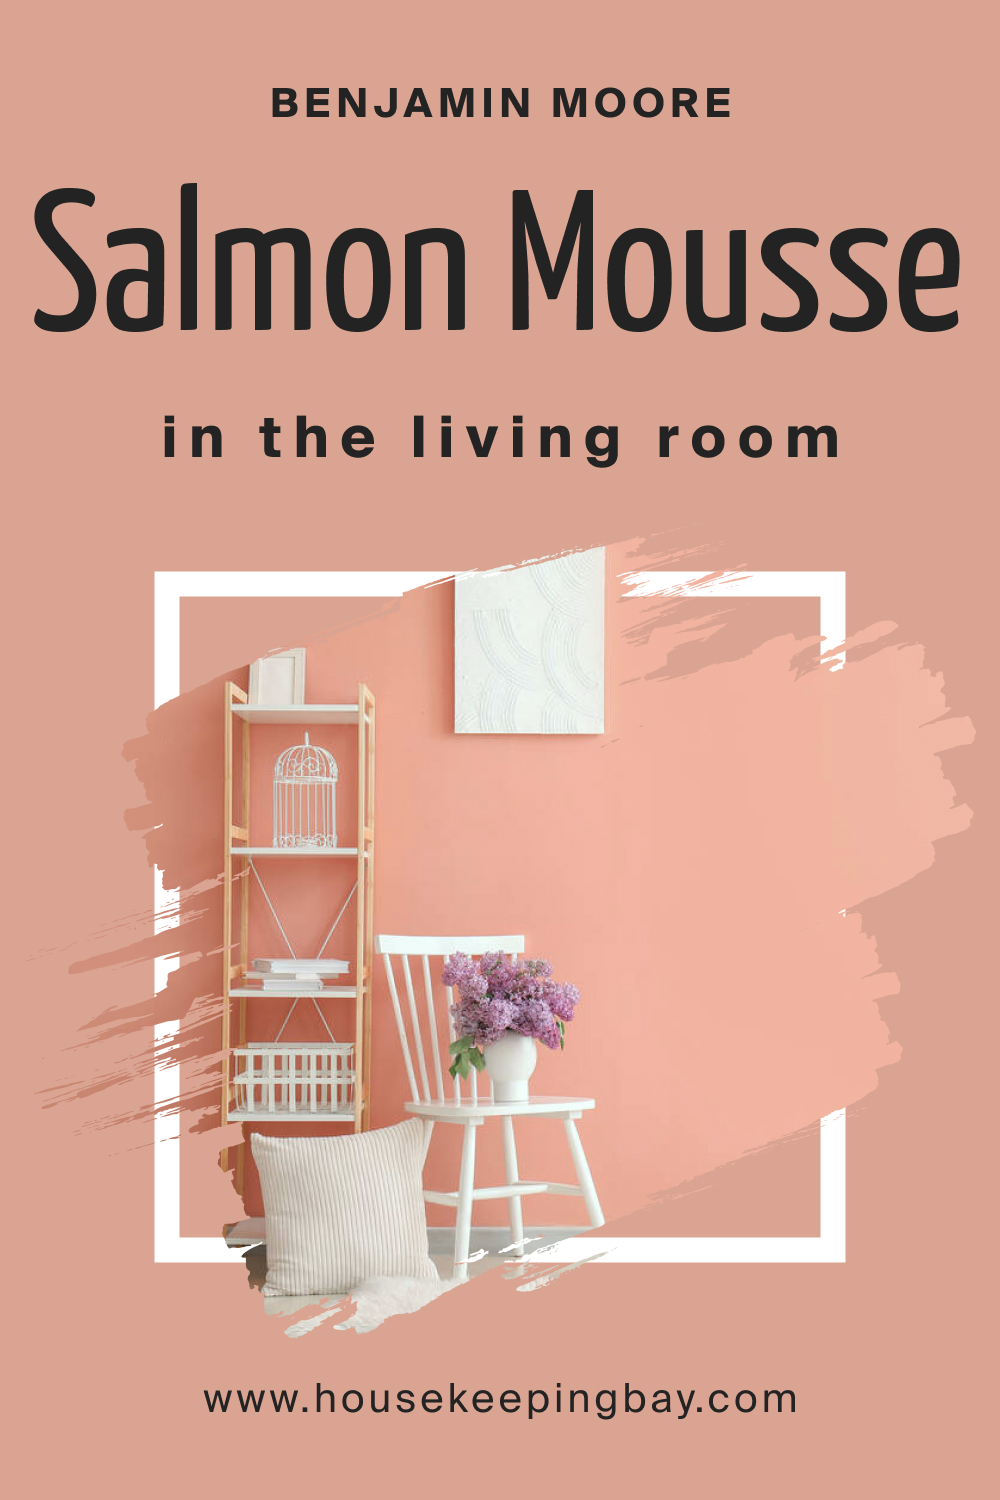 Benjamin Moore. BM Salmon Mousse 046 in the Living Room